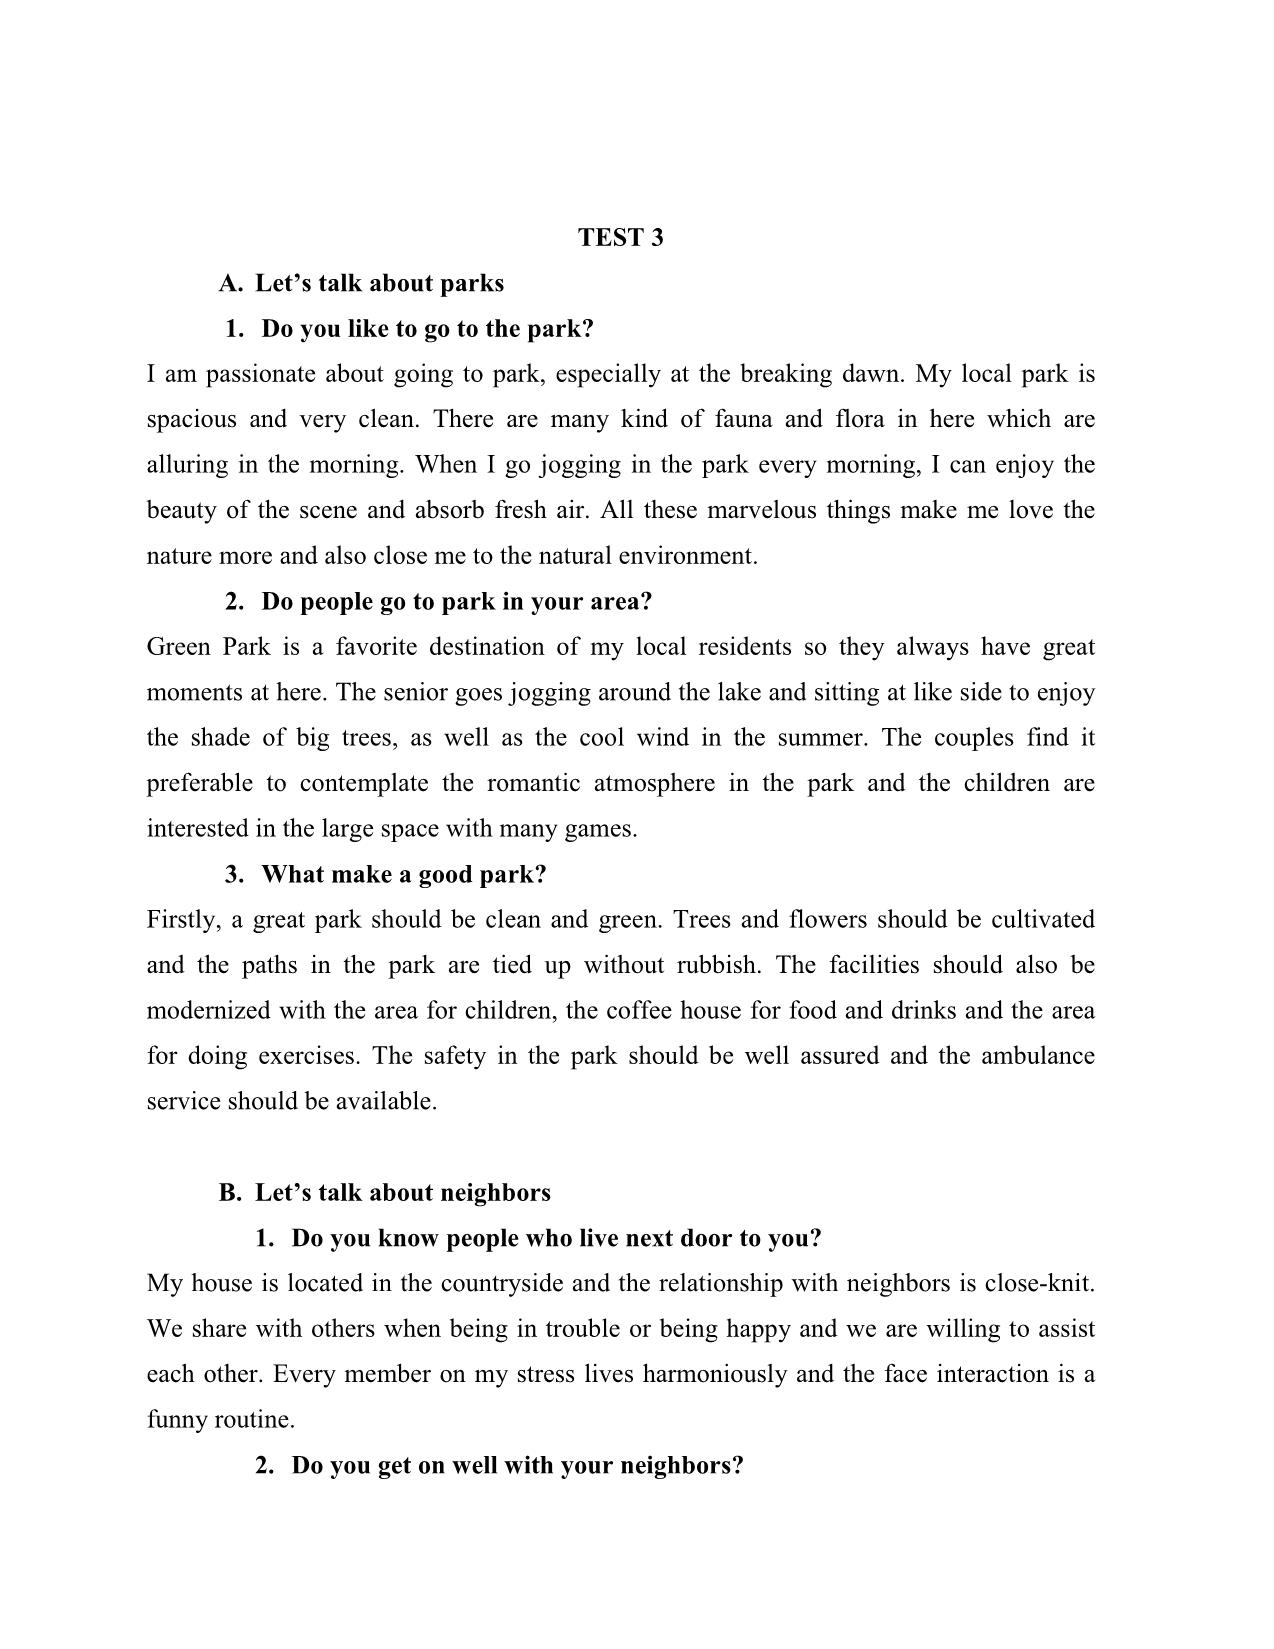 Tiếng Anh - Vstep speaking part 1 trang 4